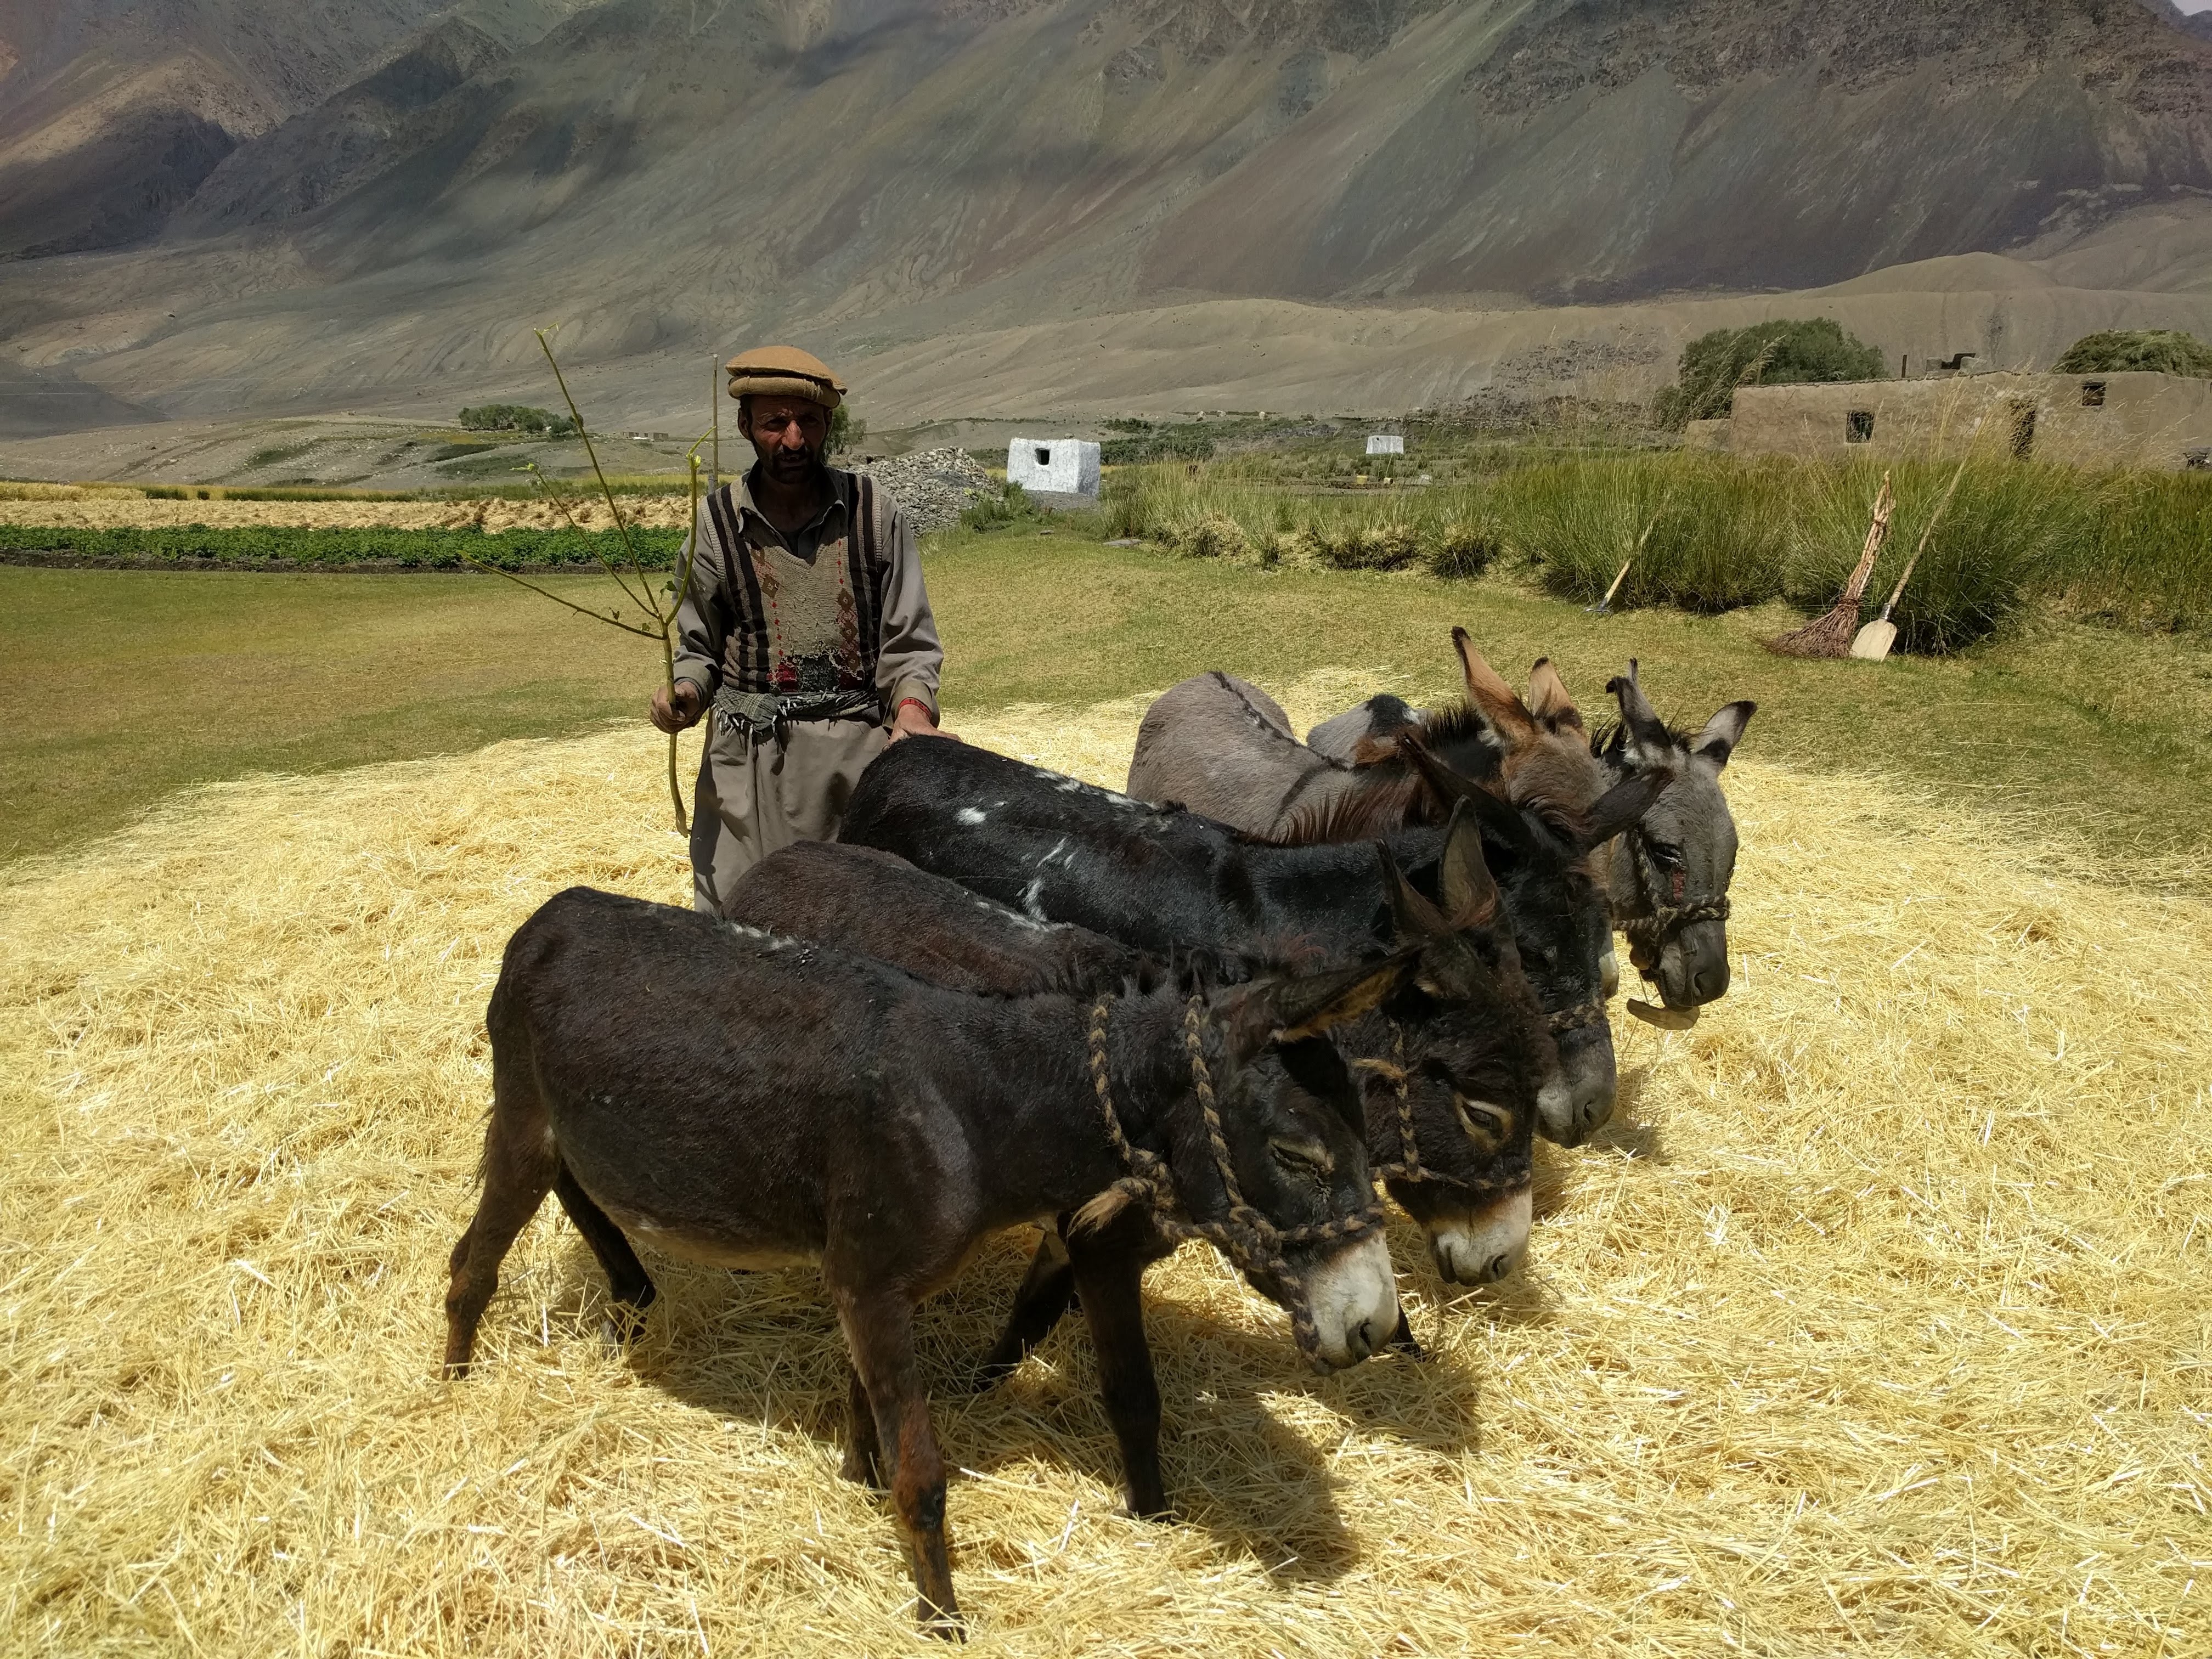 Sarhad farmer with donkeys